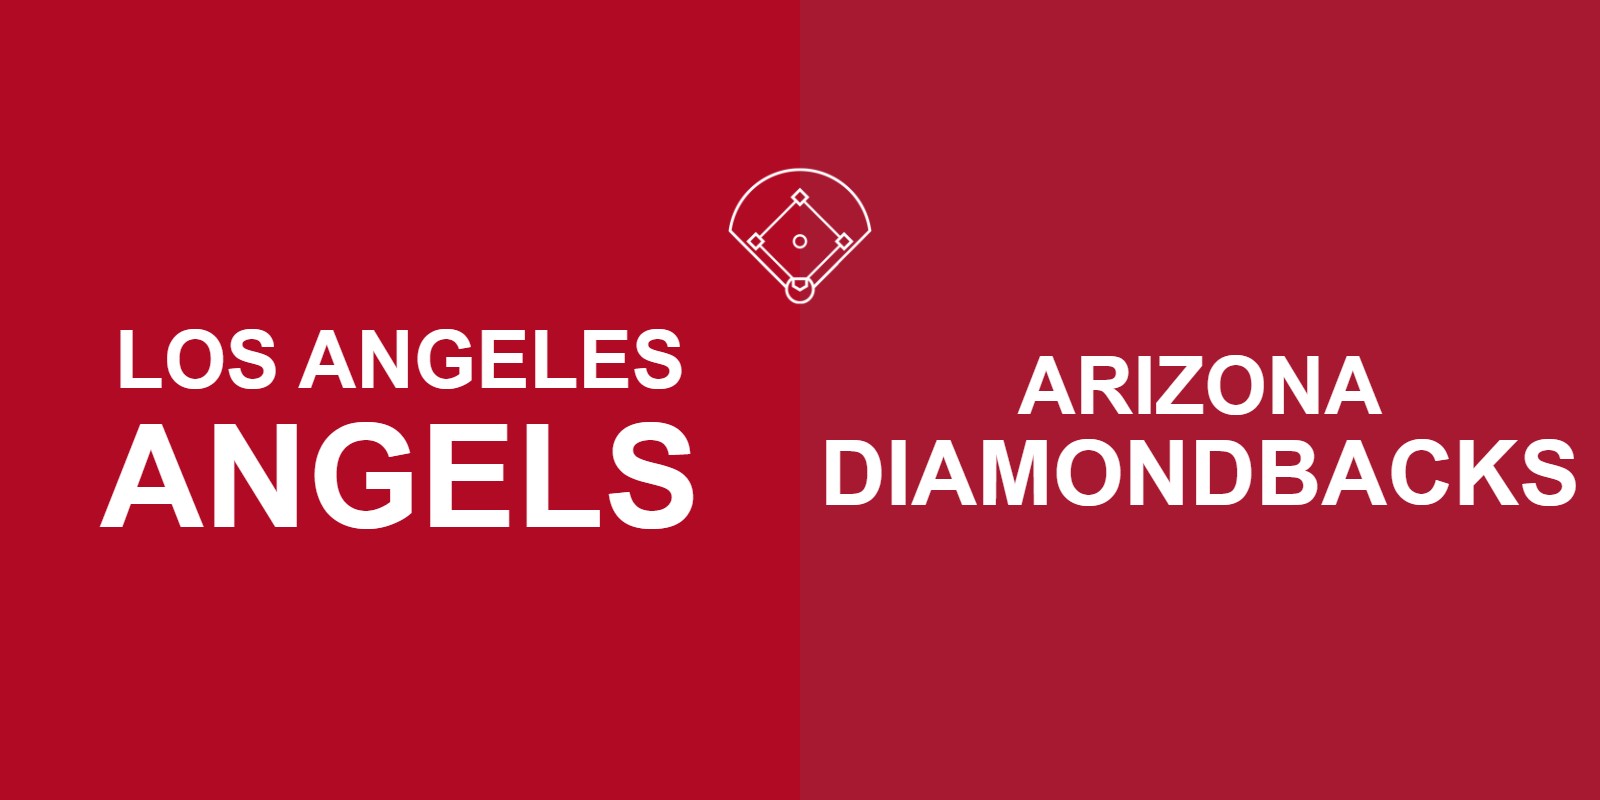 Angels vs Diamondbacks